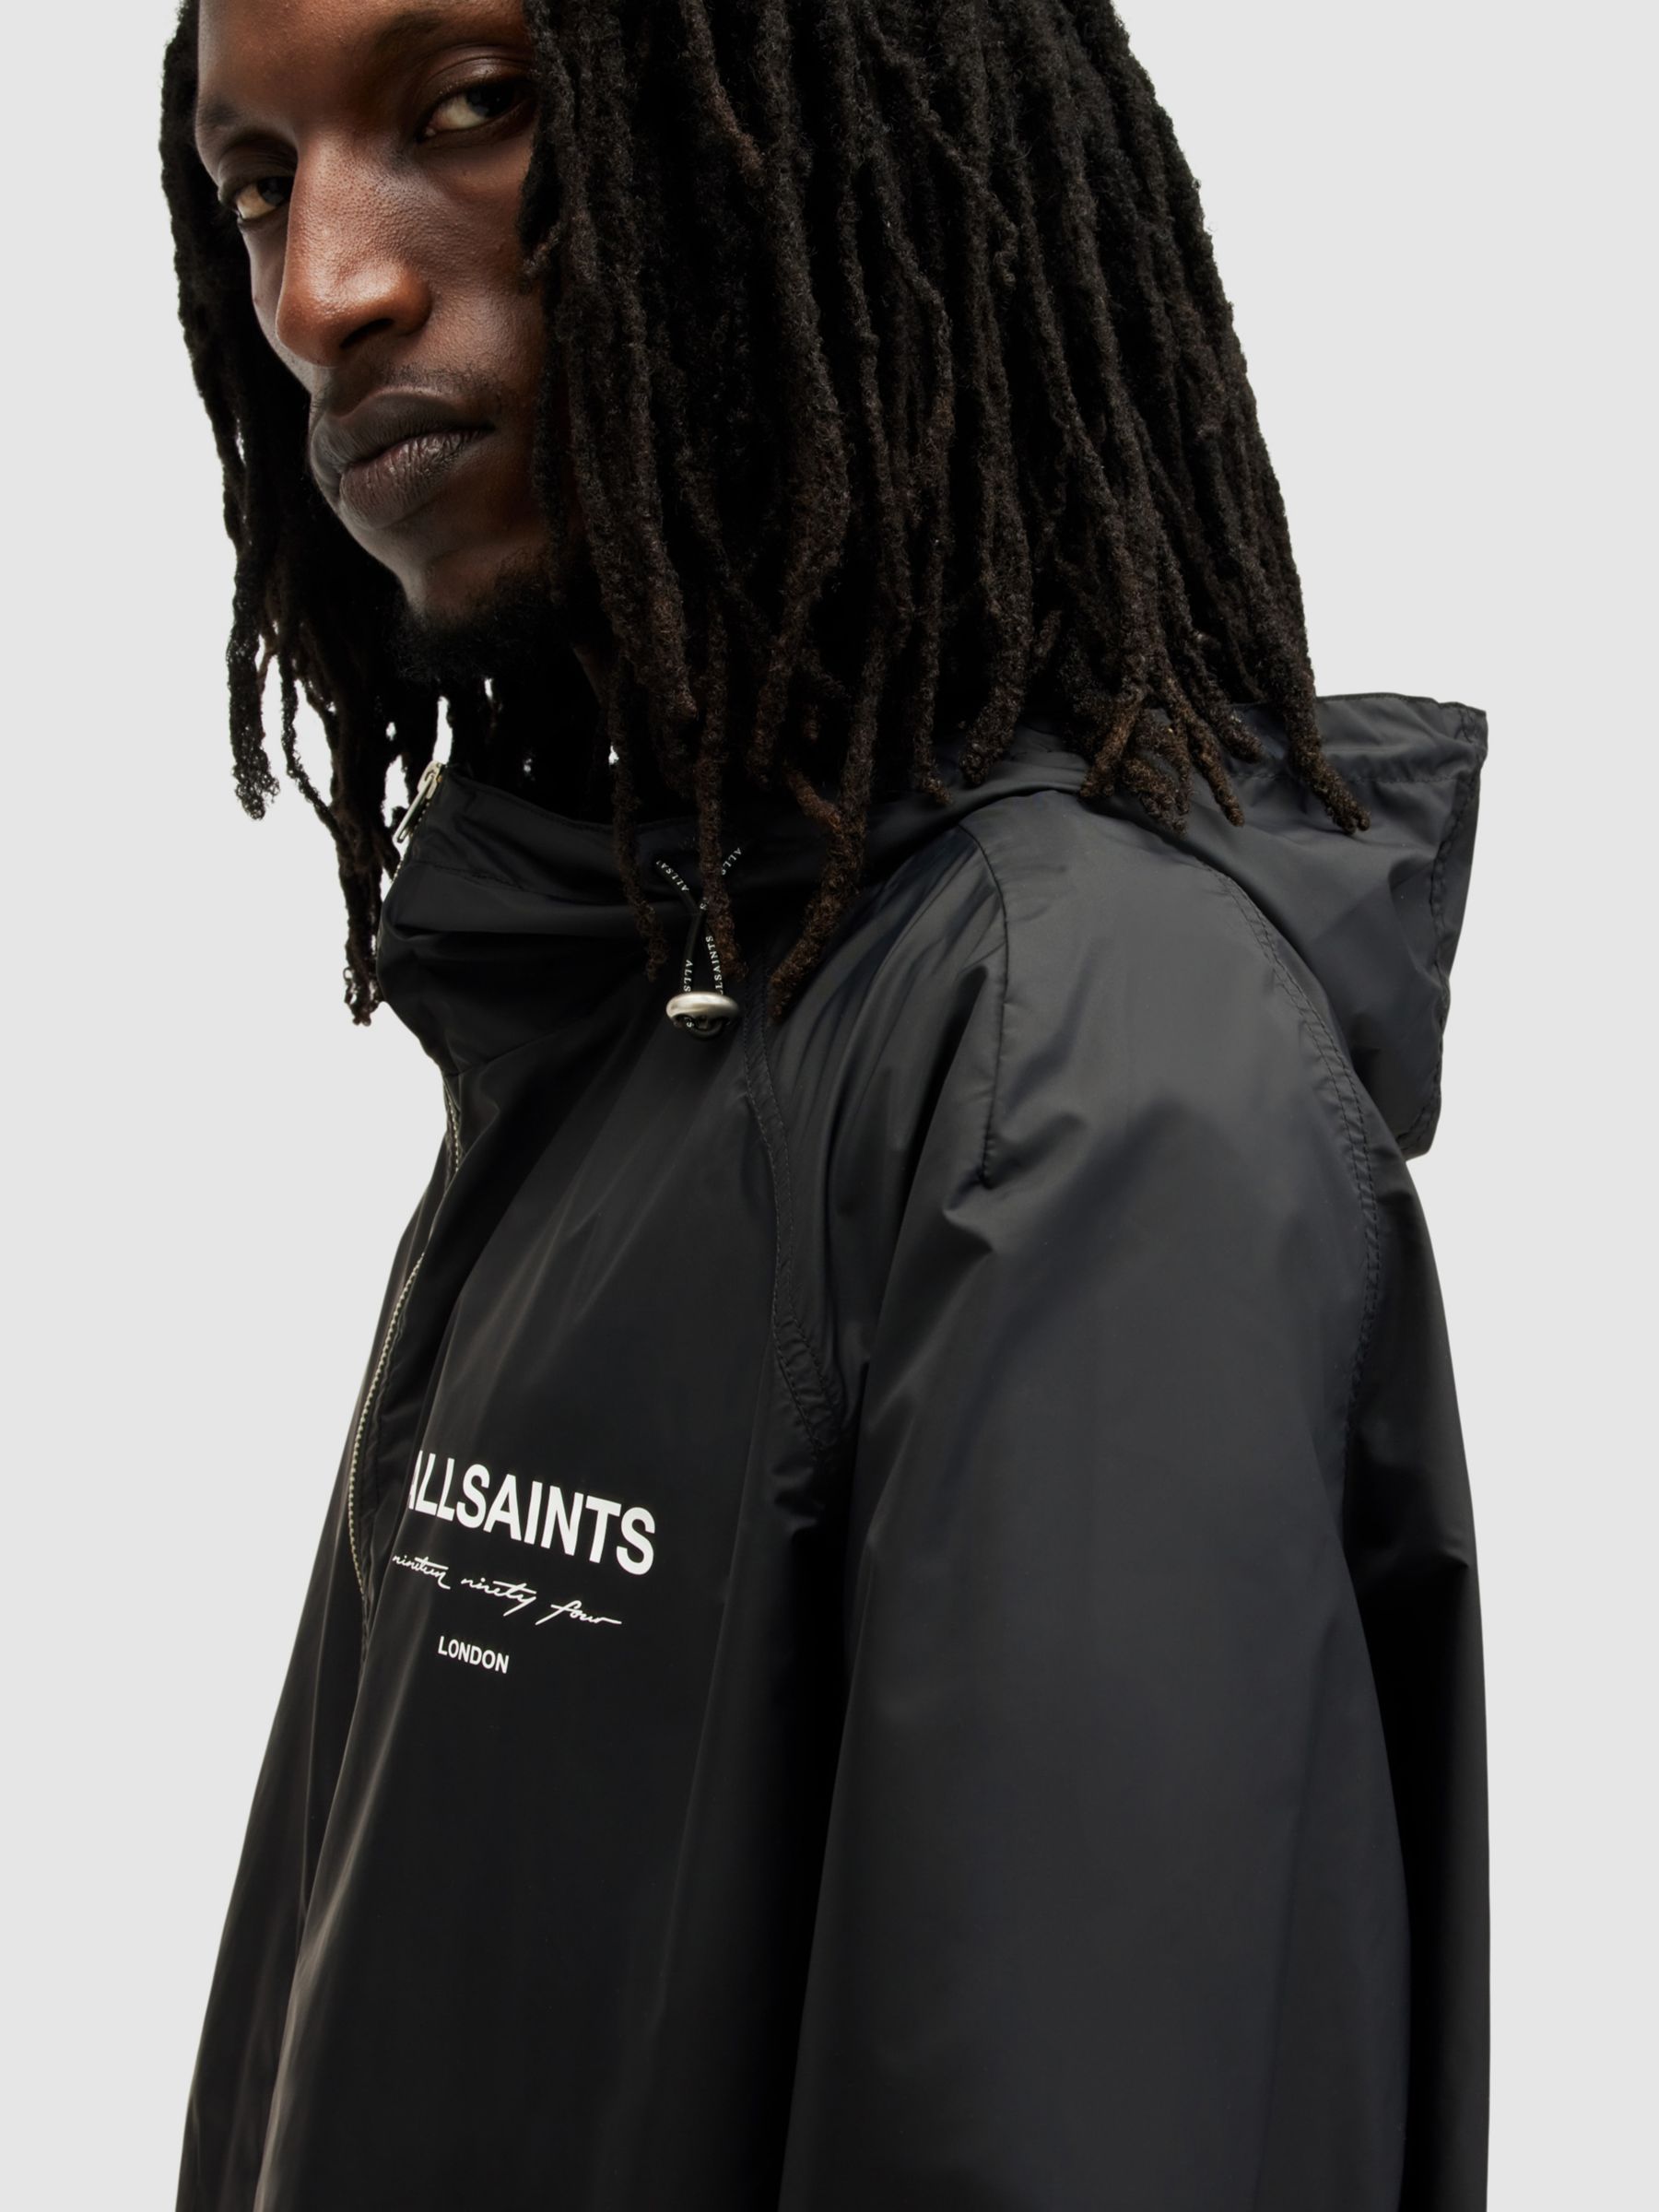 AllSaints Underground Jacket, Black, L